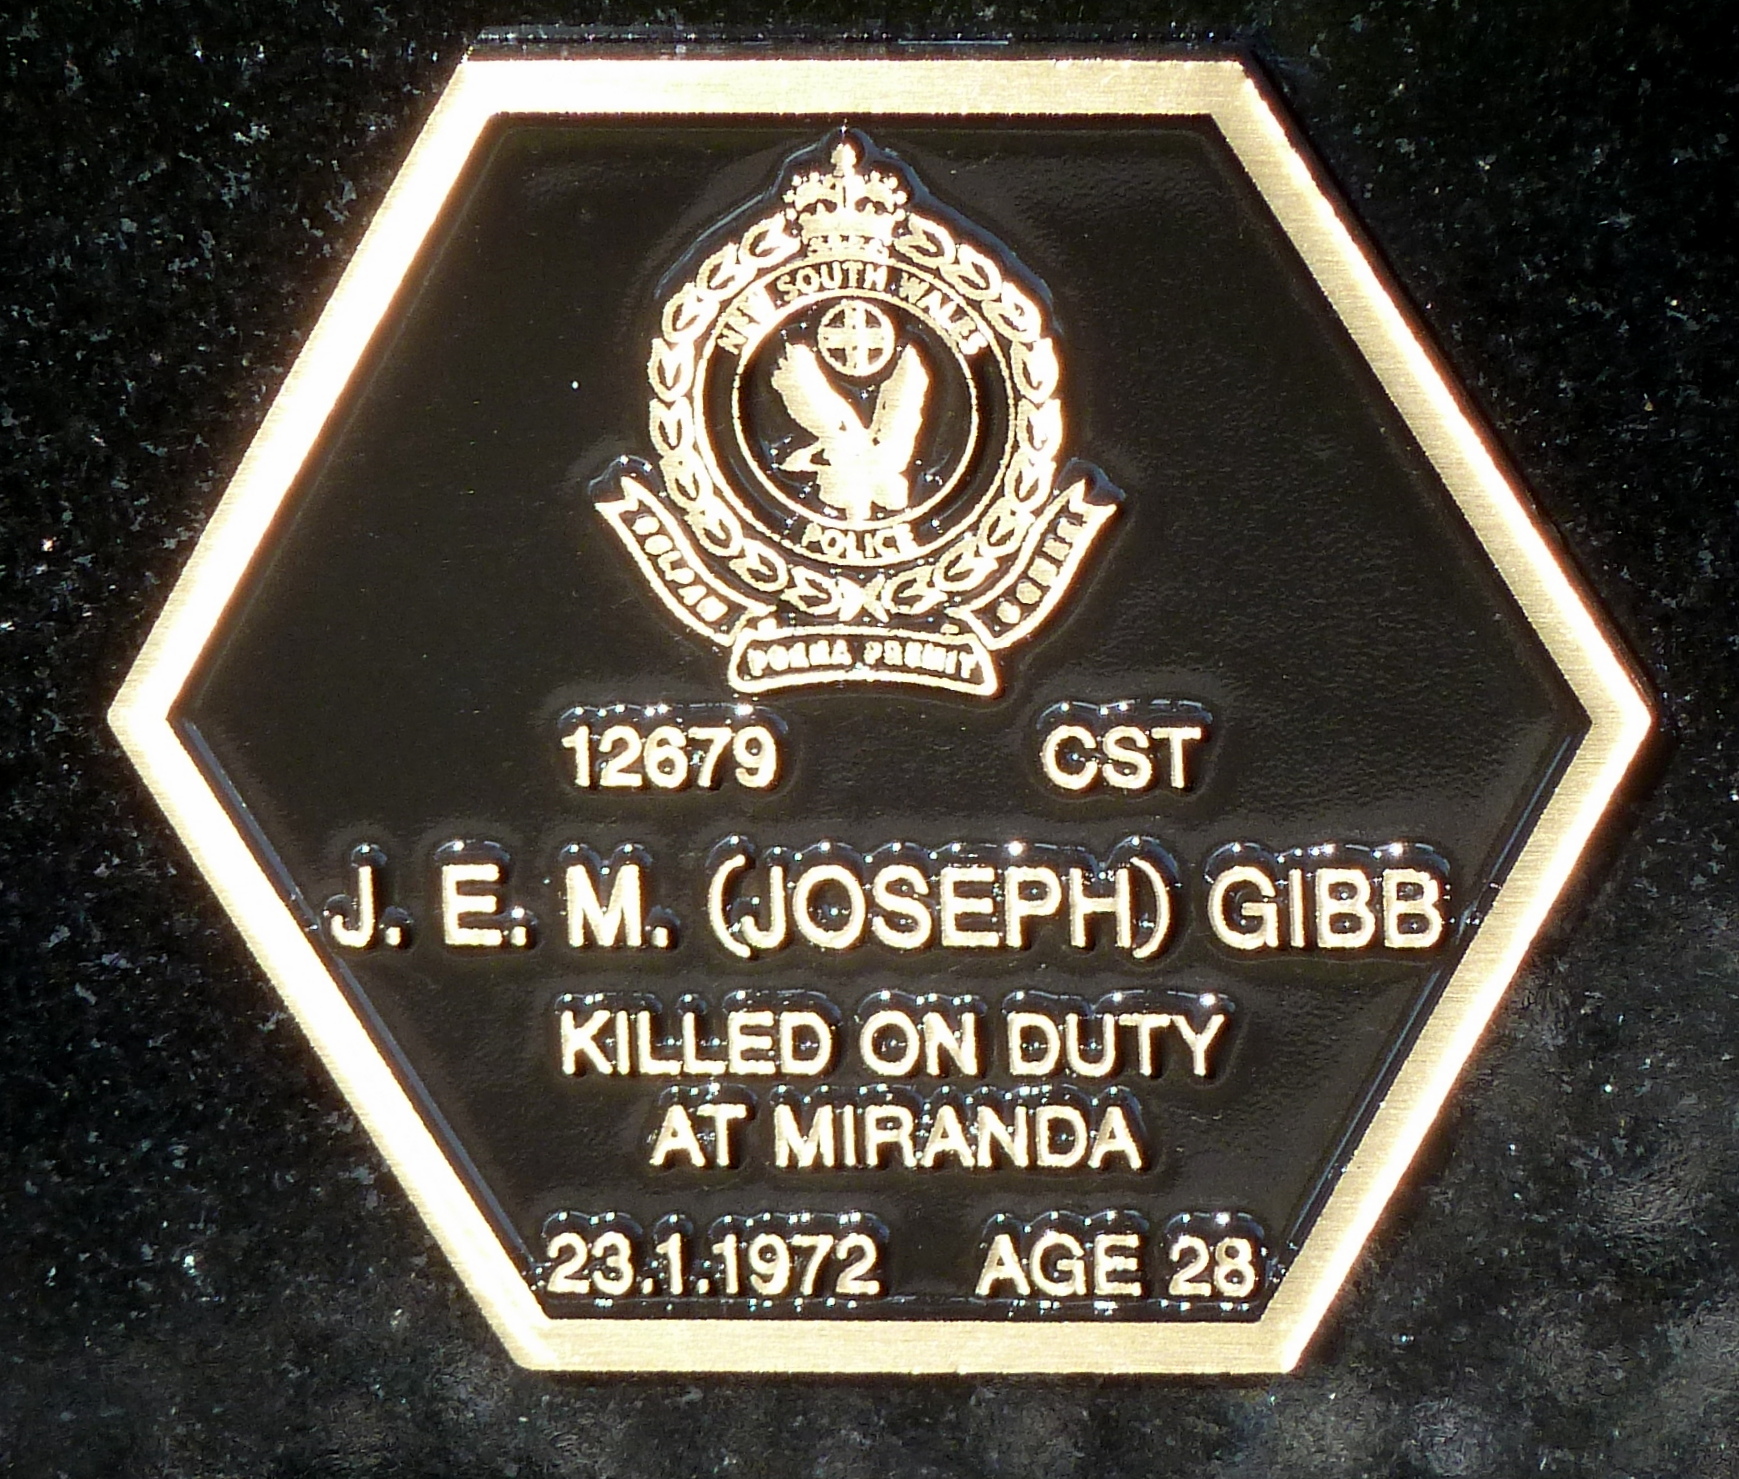 Joseph Edward Matthew GIBB